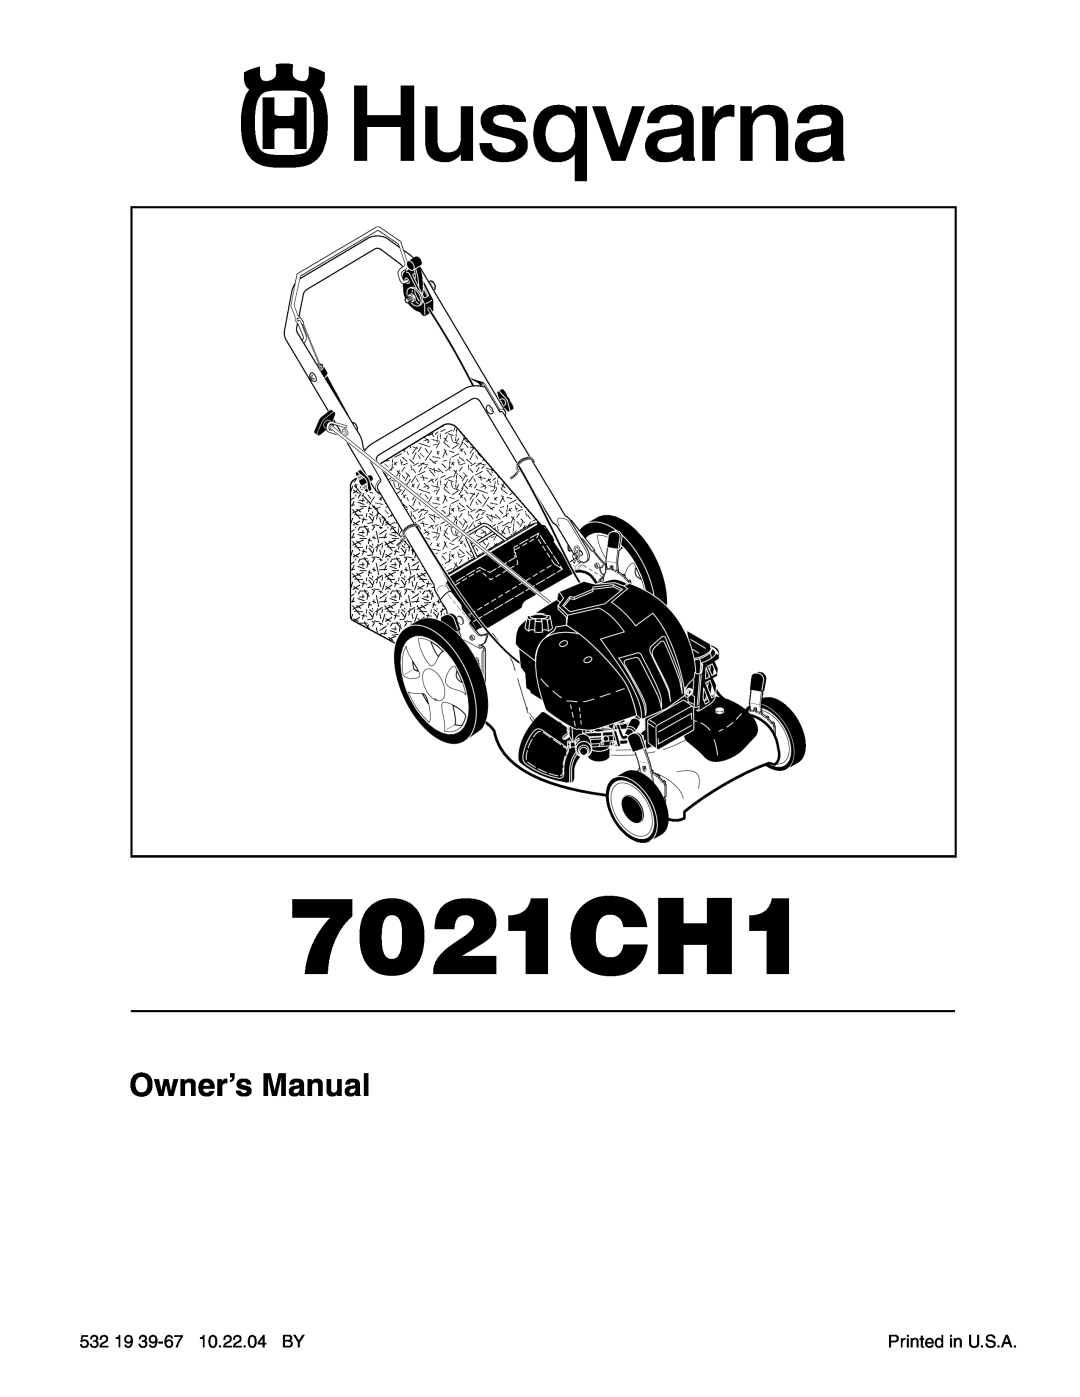 Husqvarna 7021CH1 owner manual 